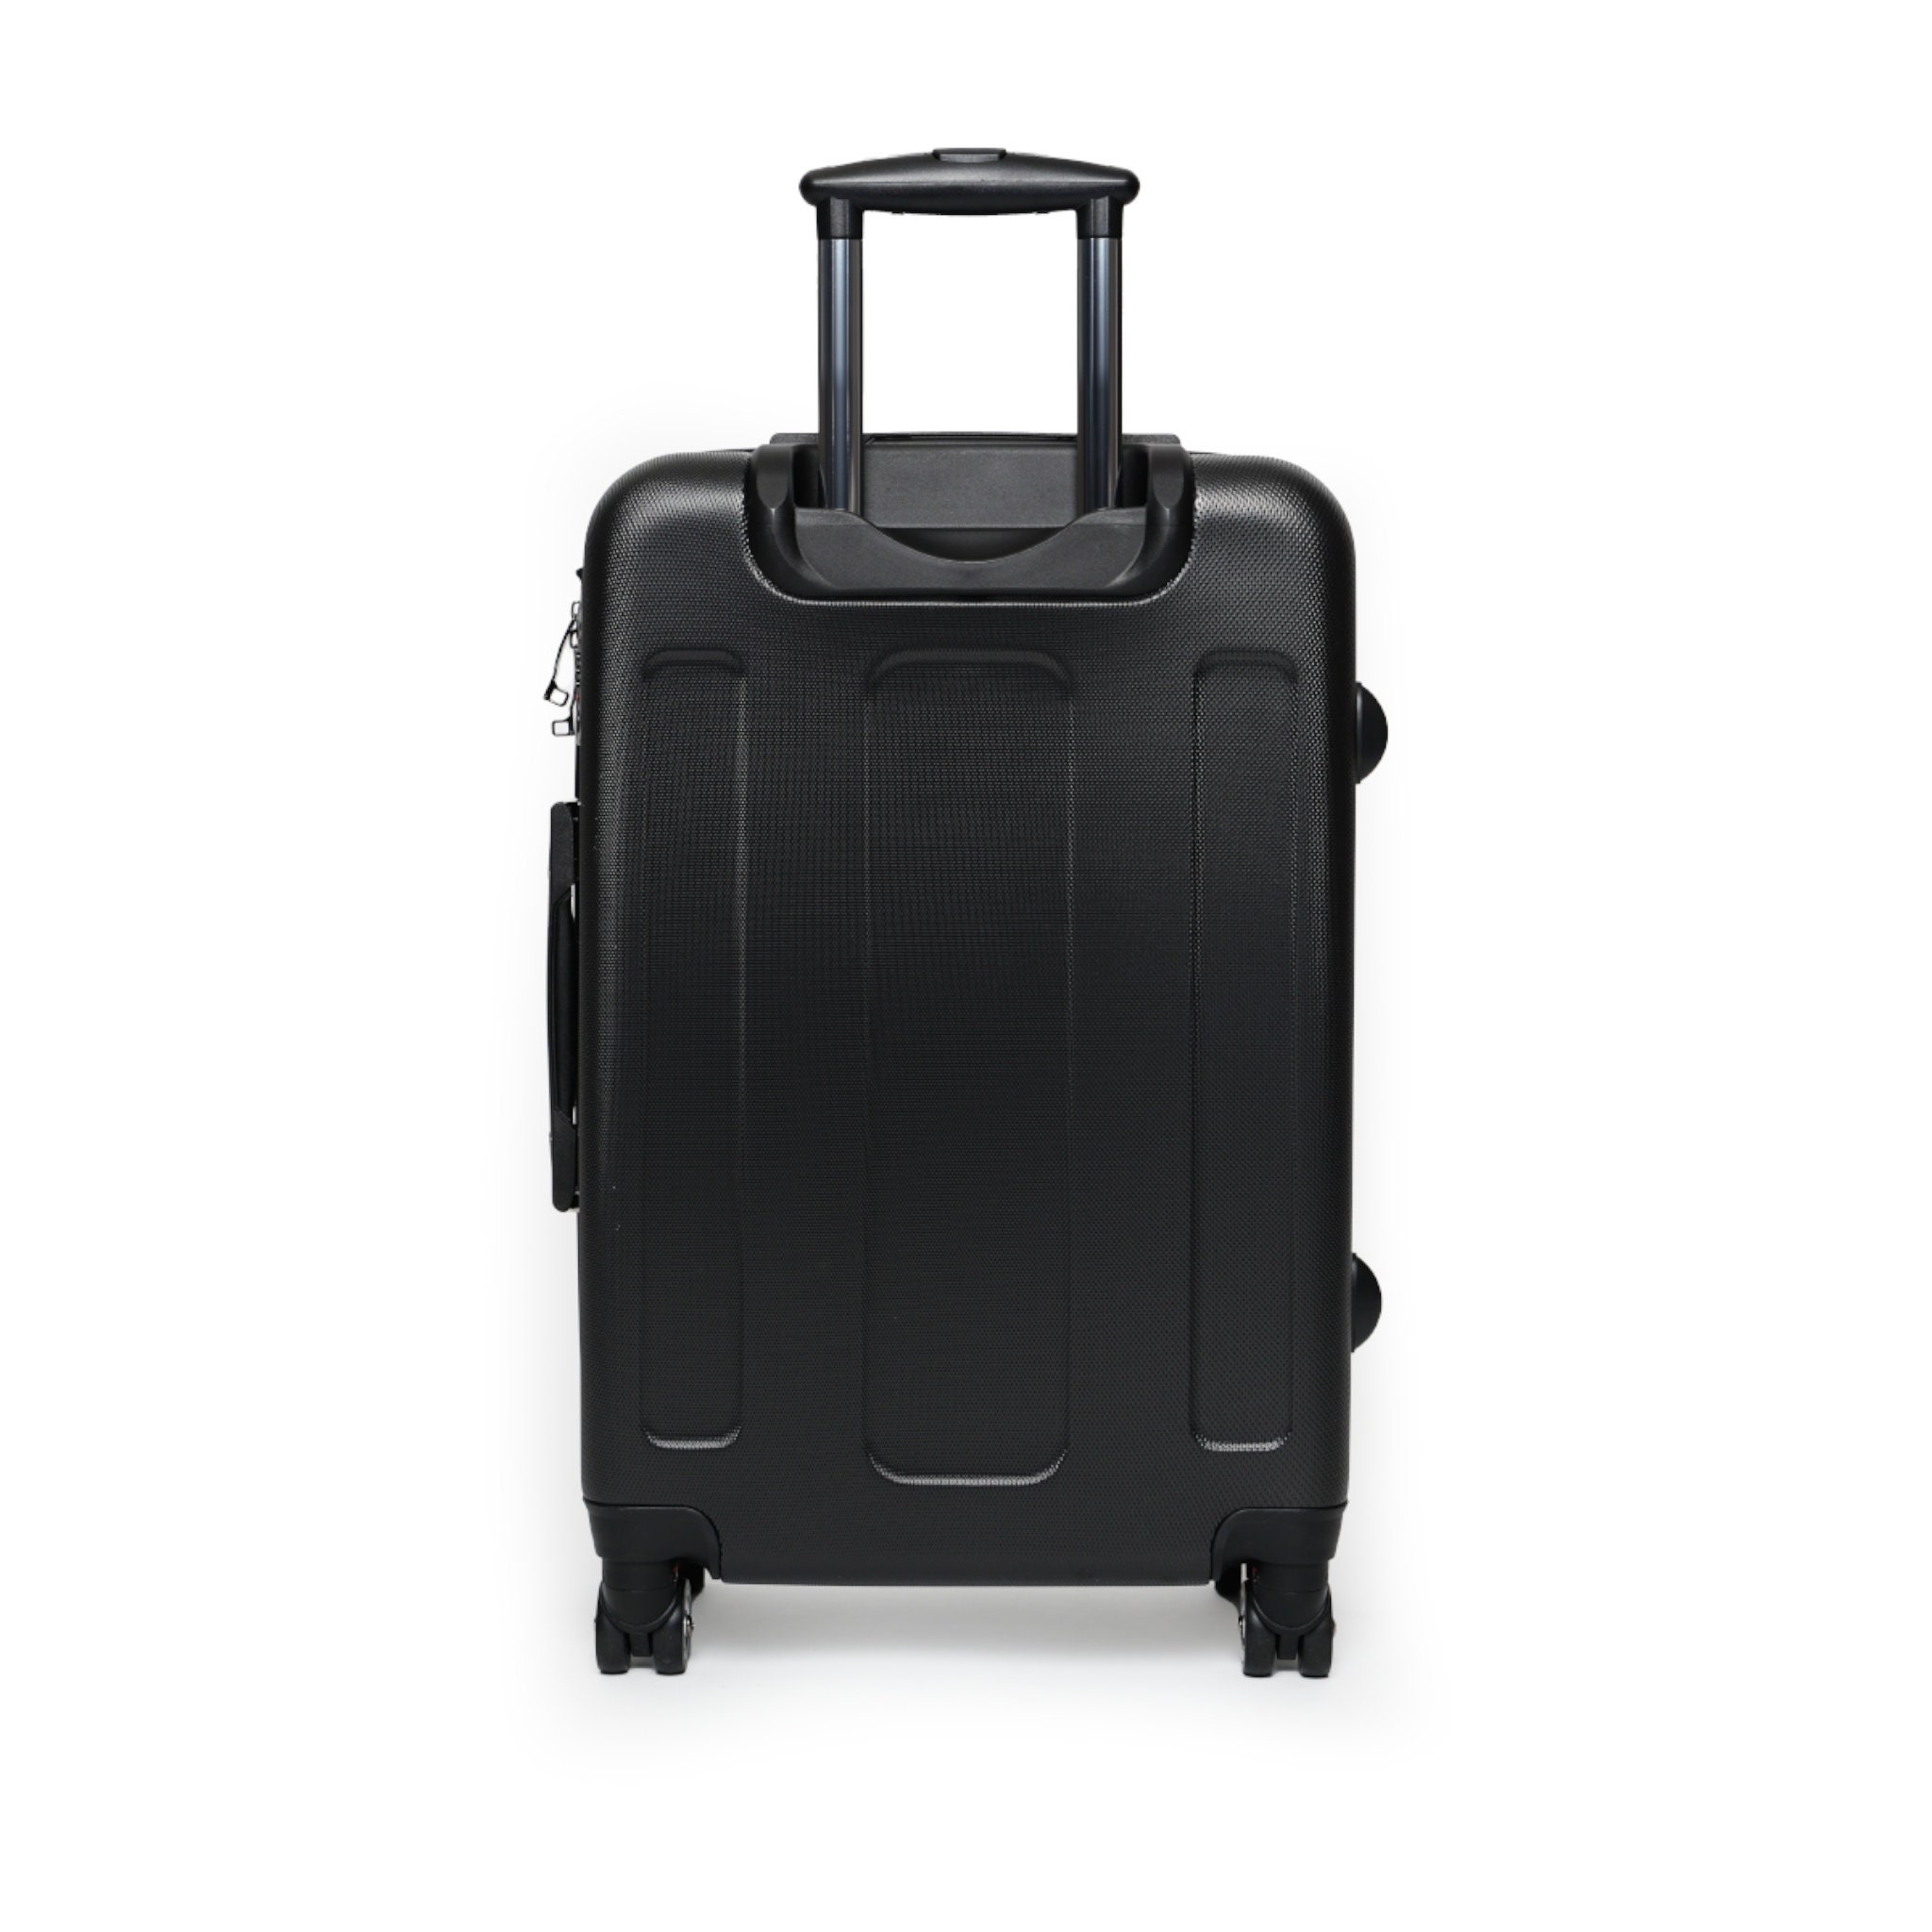 Travel Suitcase, Black Cat & Coffee Design, 360 Swivel Wheels, Adjustable Telescopic Handle, Premium Polycarbonate Shell